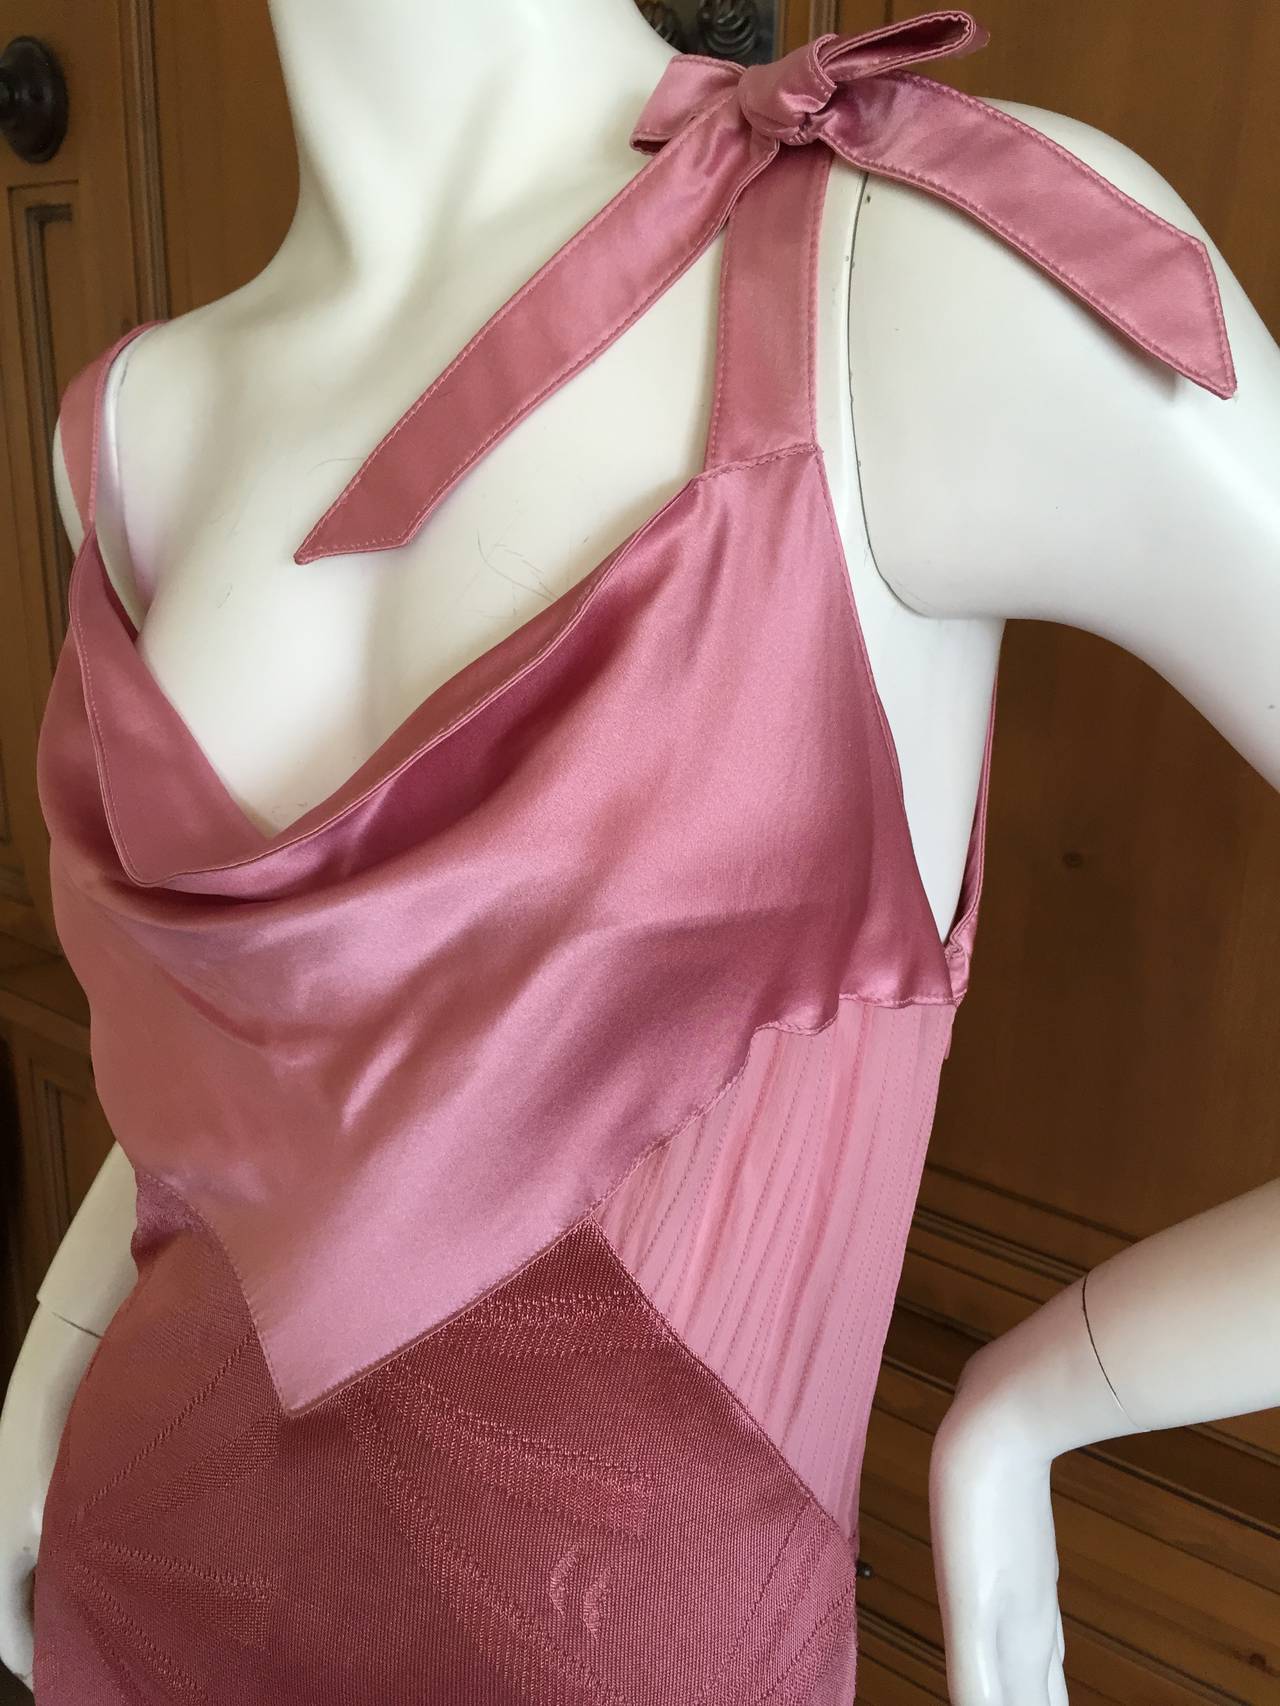 John Galliano Romantic Dusty Rose Dress with Silk Satin Inserts
Bust 40